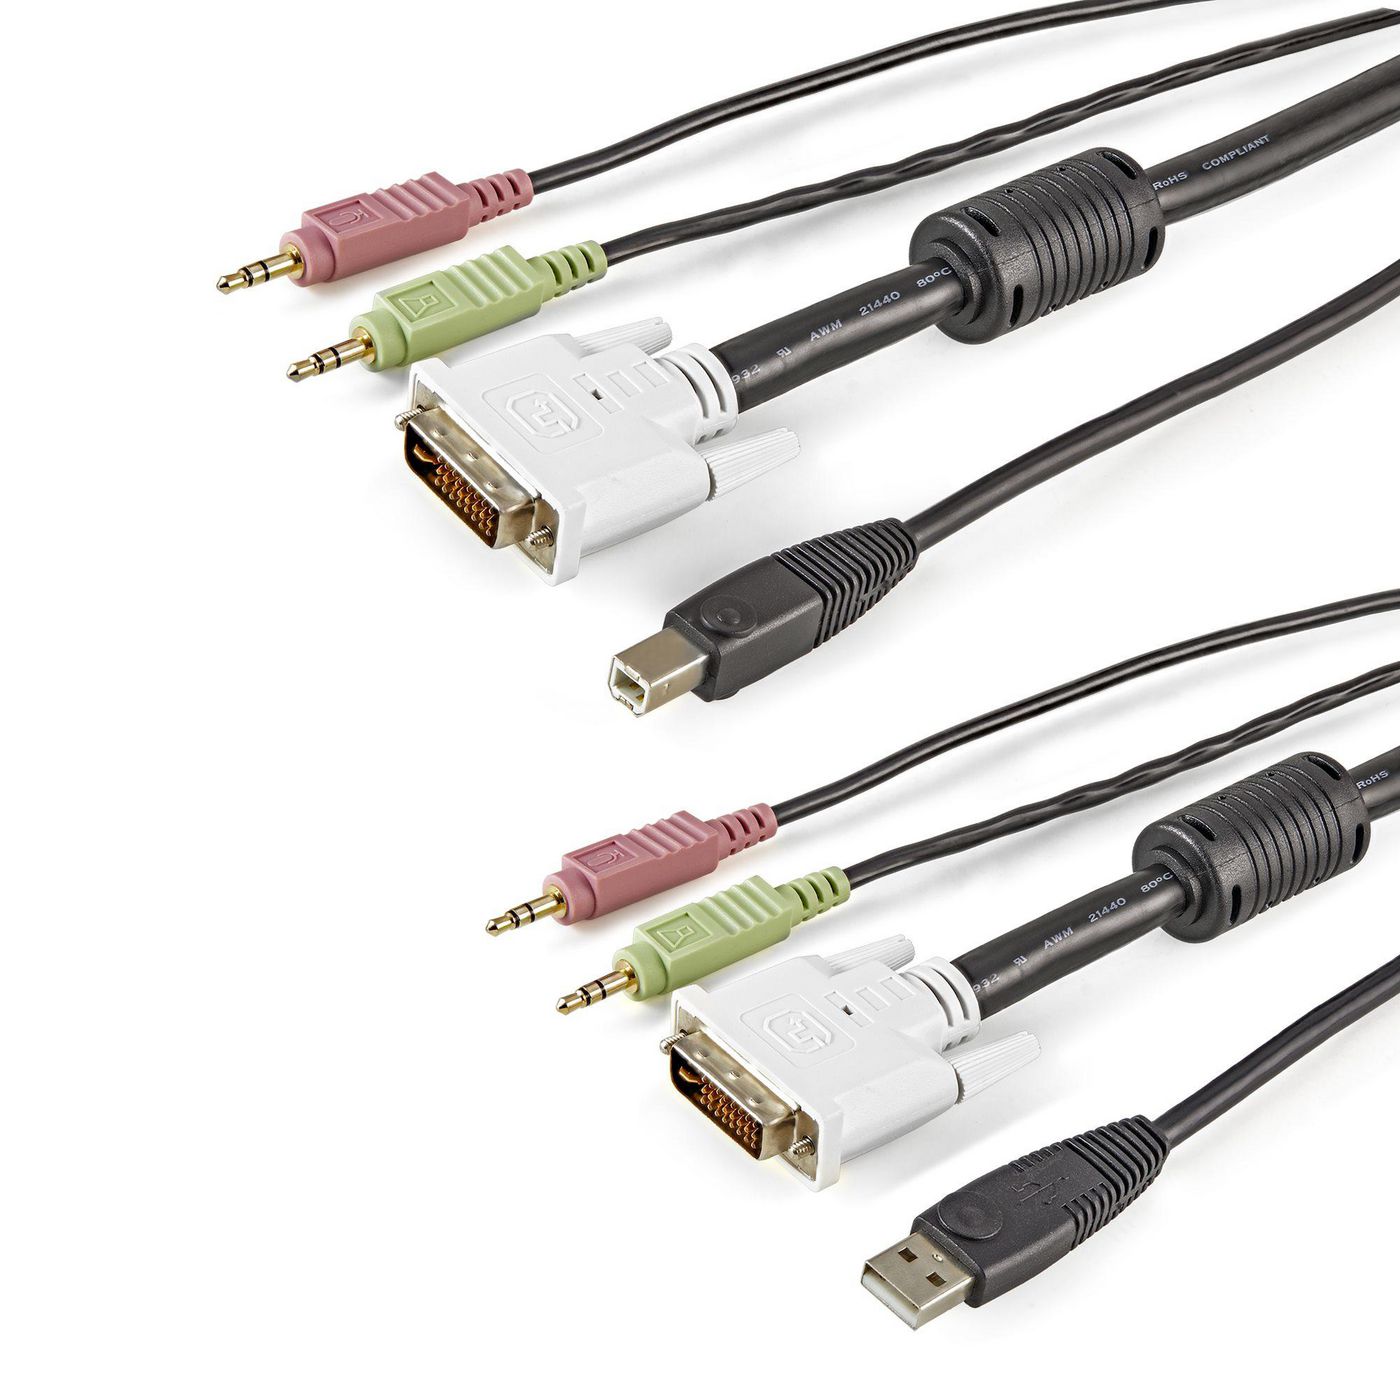 STARTECH.COM 1,8m 4-in-1 USB DVI KVM Kabel mit Audio und Mikrofon - USB DVI KVM Switch Kabel mit Aud